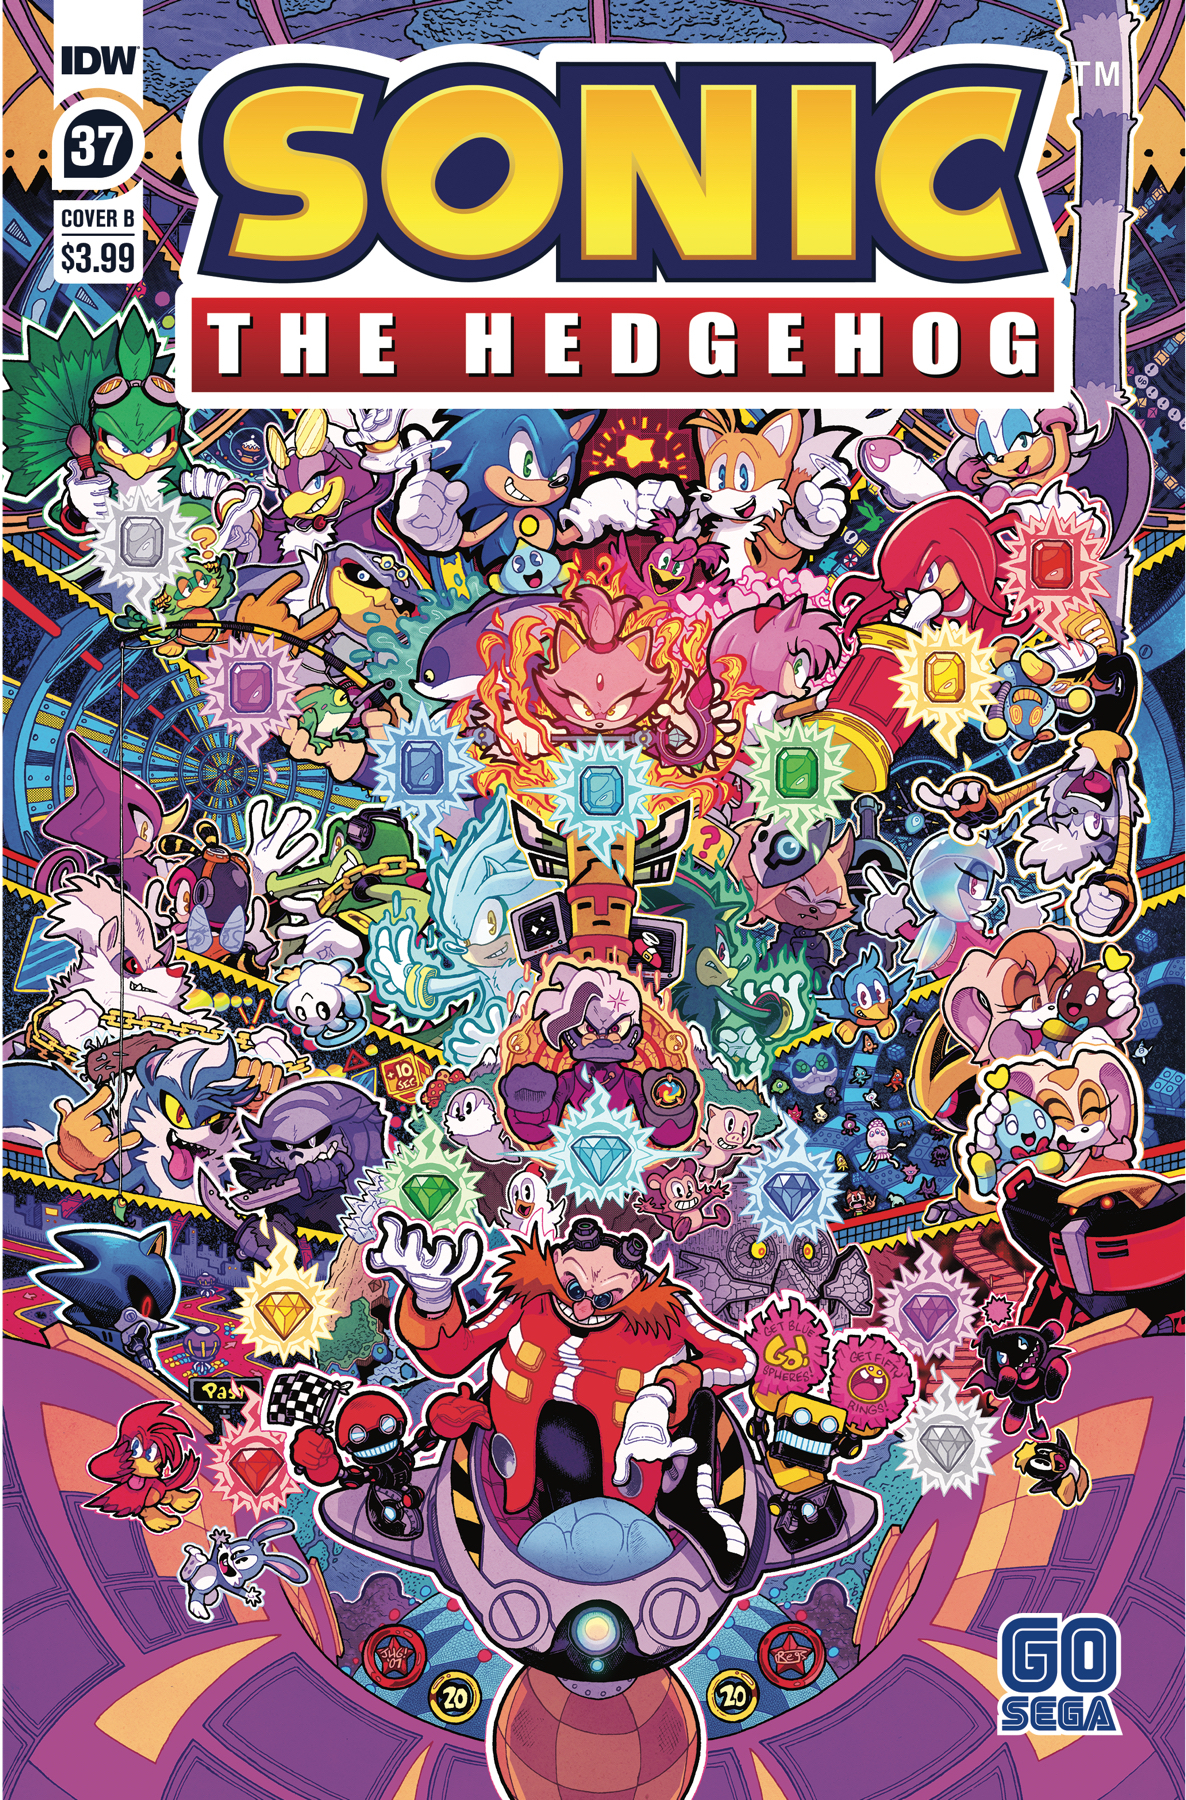 Sonic the Hedgehog #37 Cover B Jon Gray